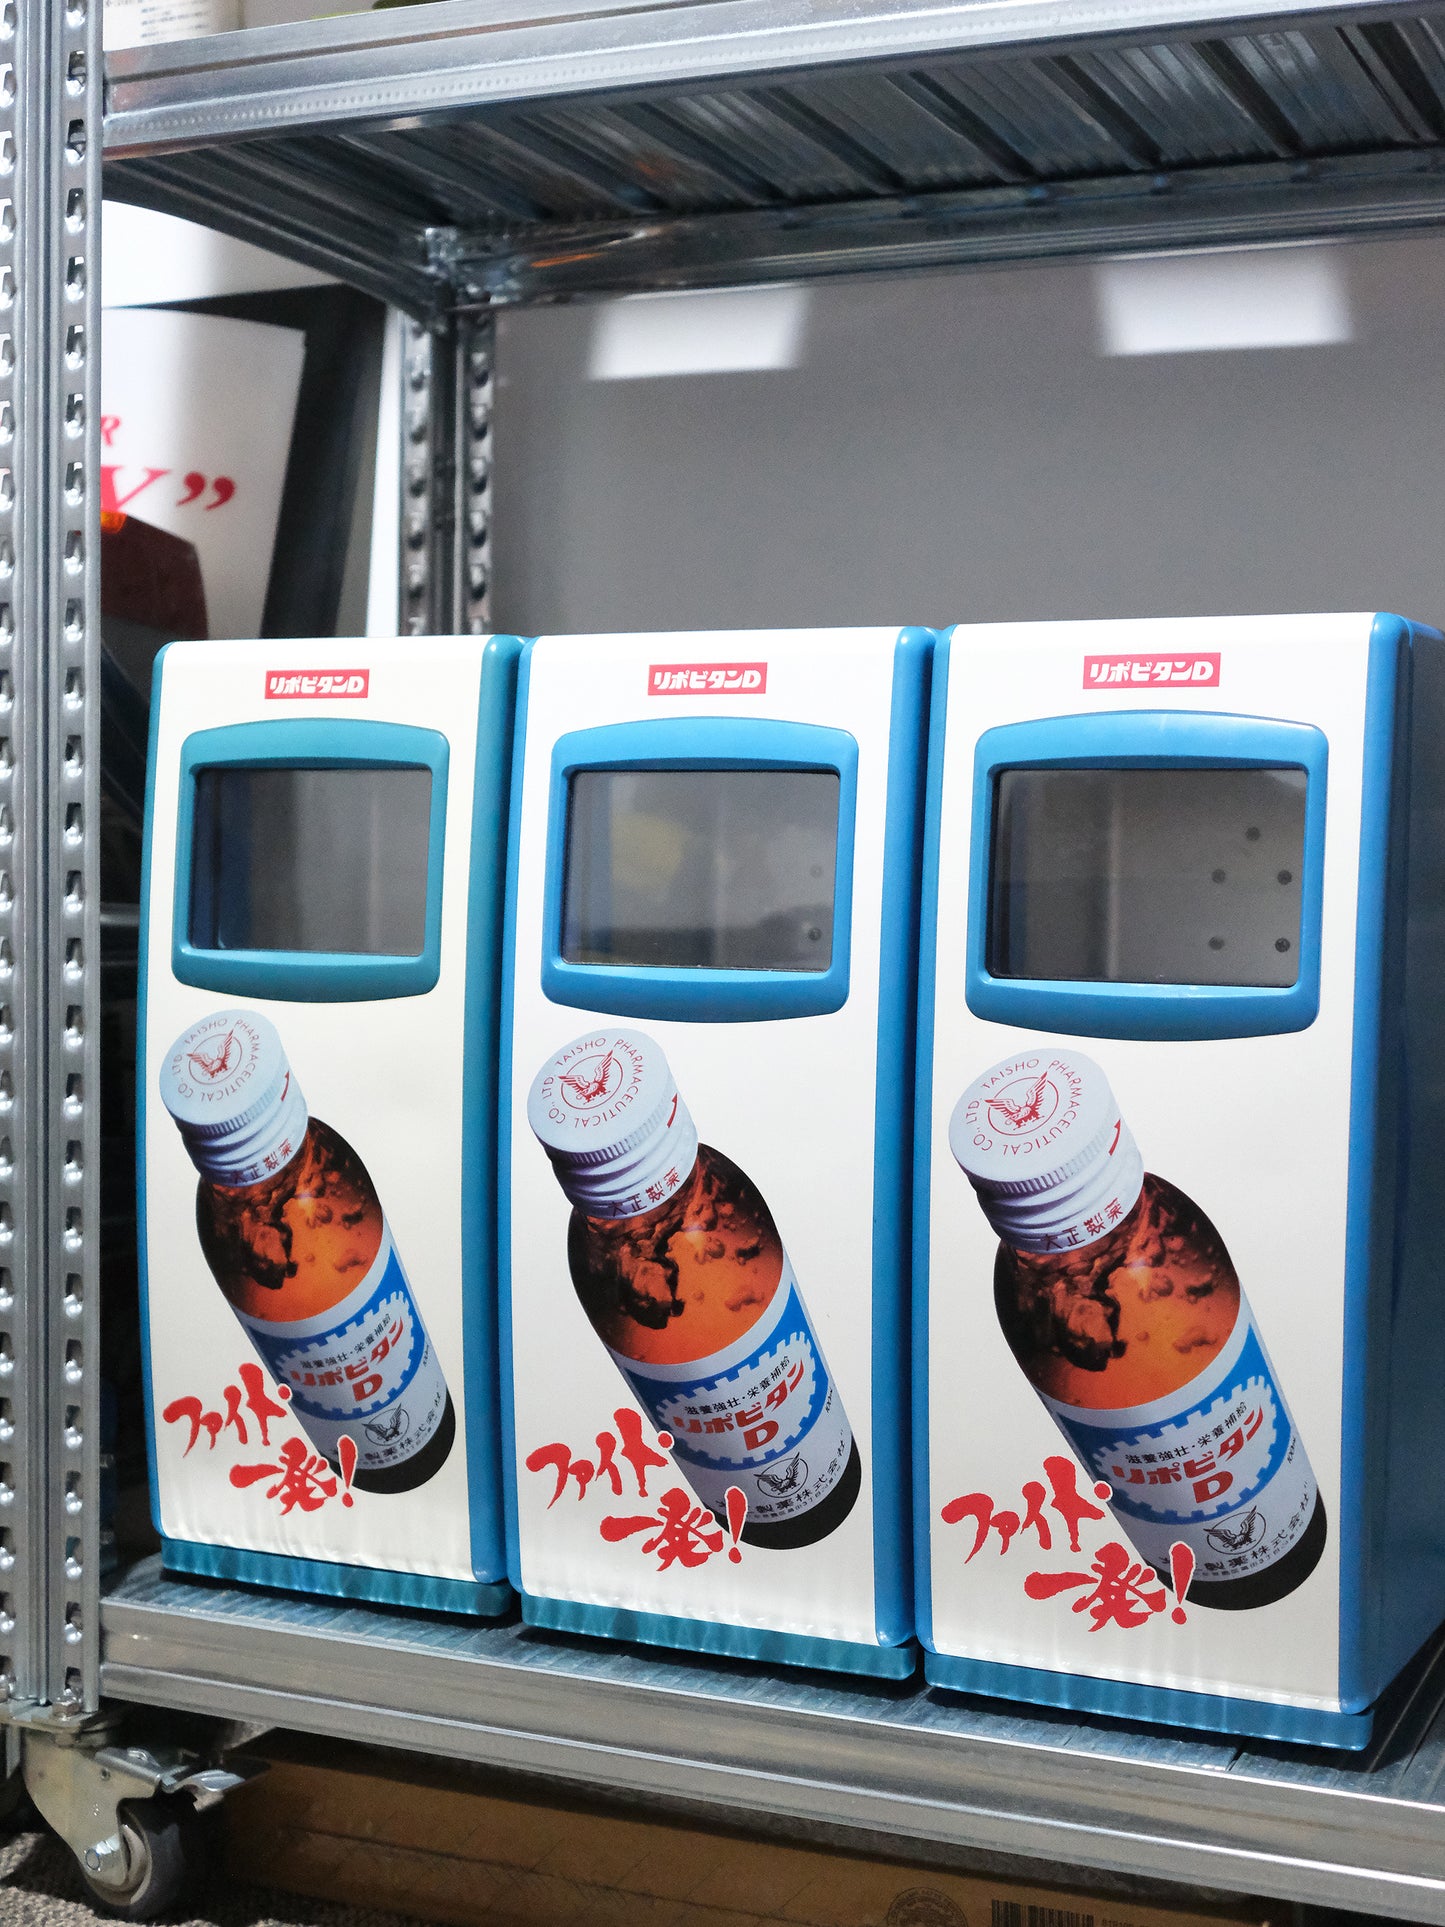 Sanyo 三洋 リポビタンD 力保健 40周年 抽獎 宣傳懸賞品 冷凍 小雪櫃